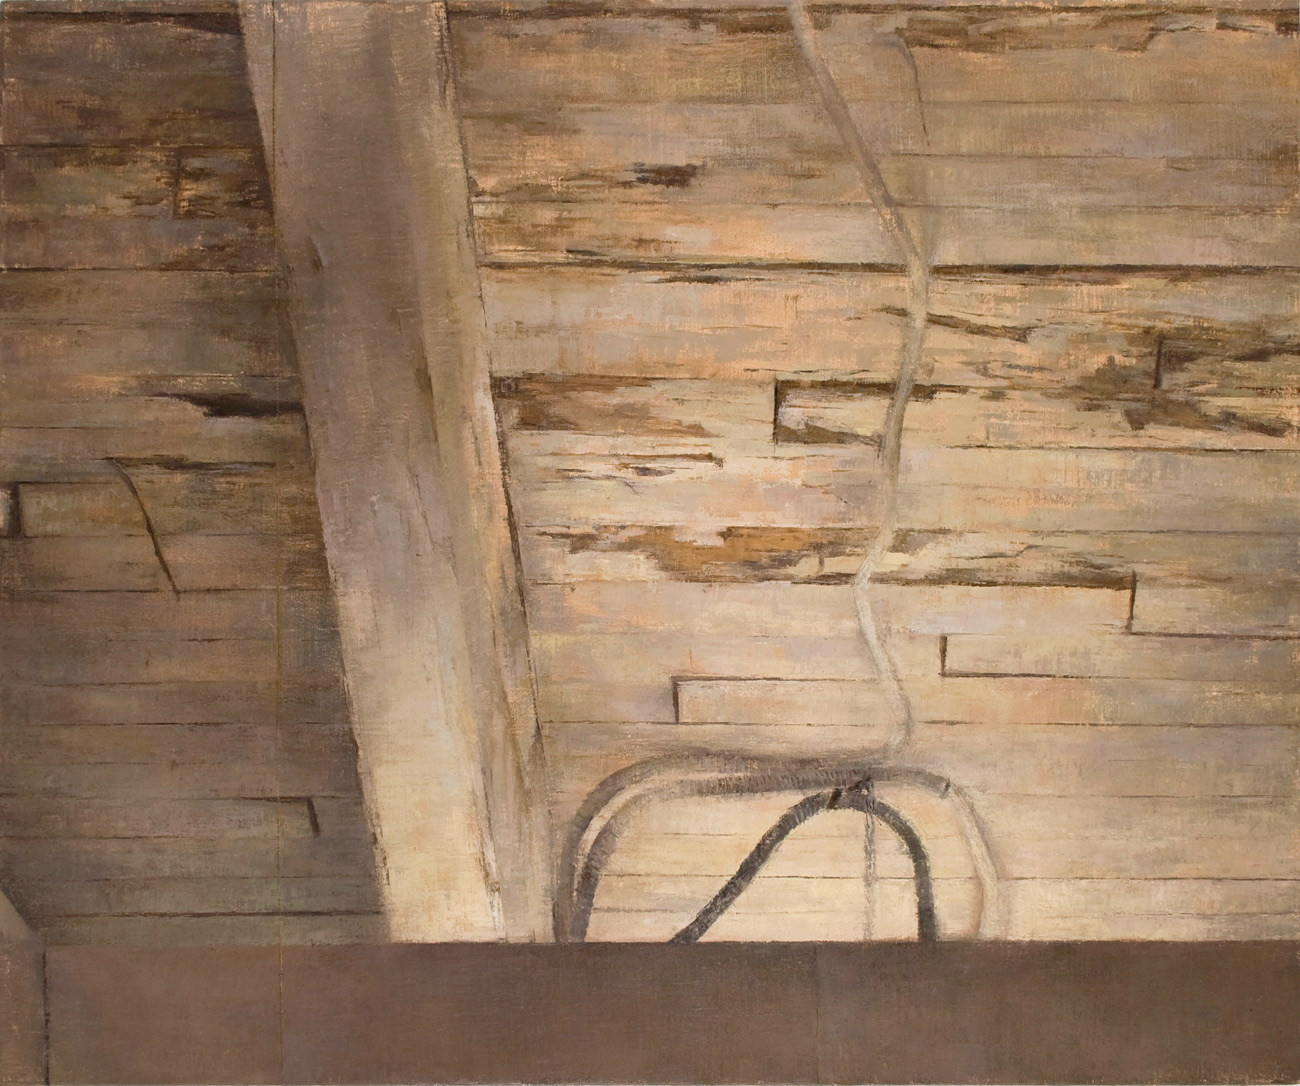   Sean's Ceiling , 2010 oil on linen, 36 x 39in 